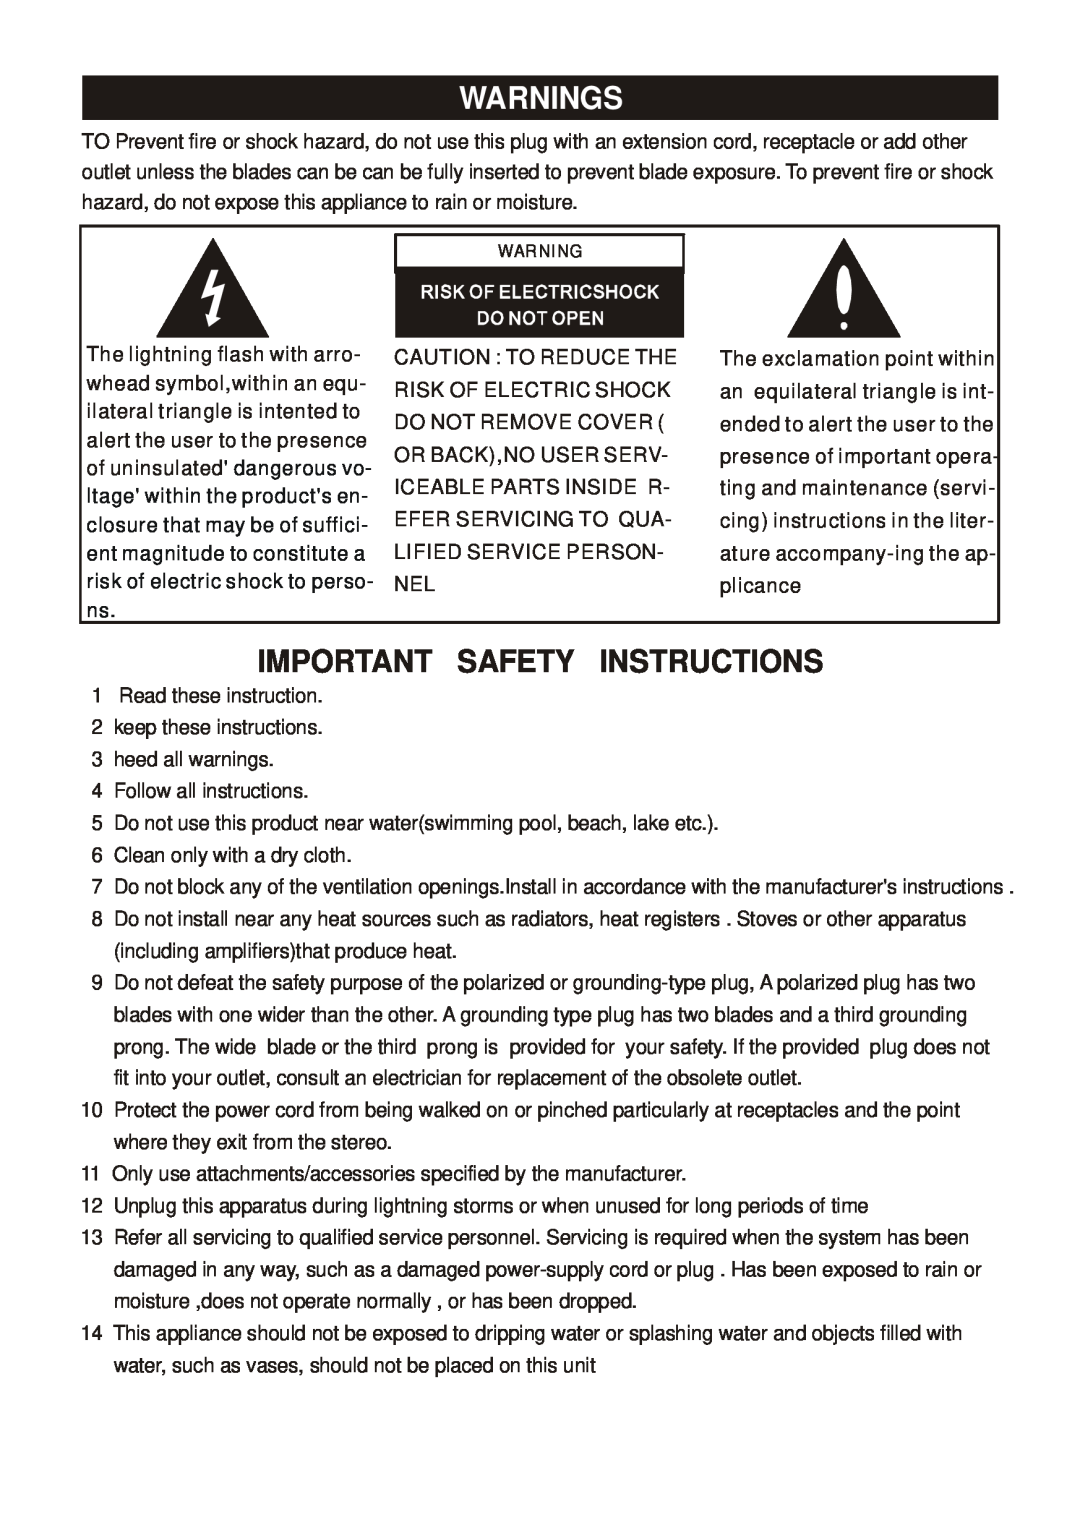 Sylvania SRCD904 manual Warnings, Important Safety Instructions 